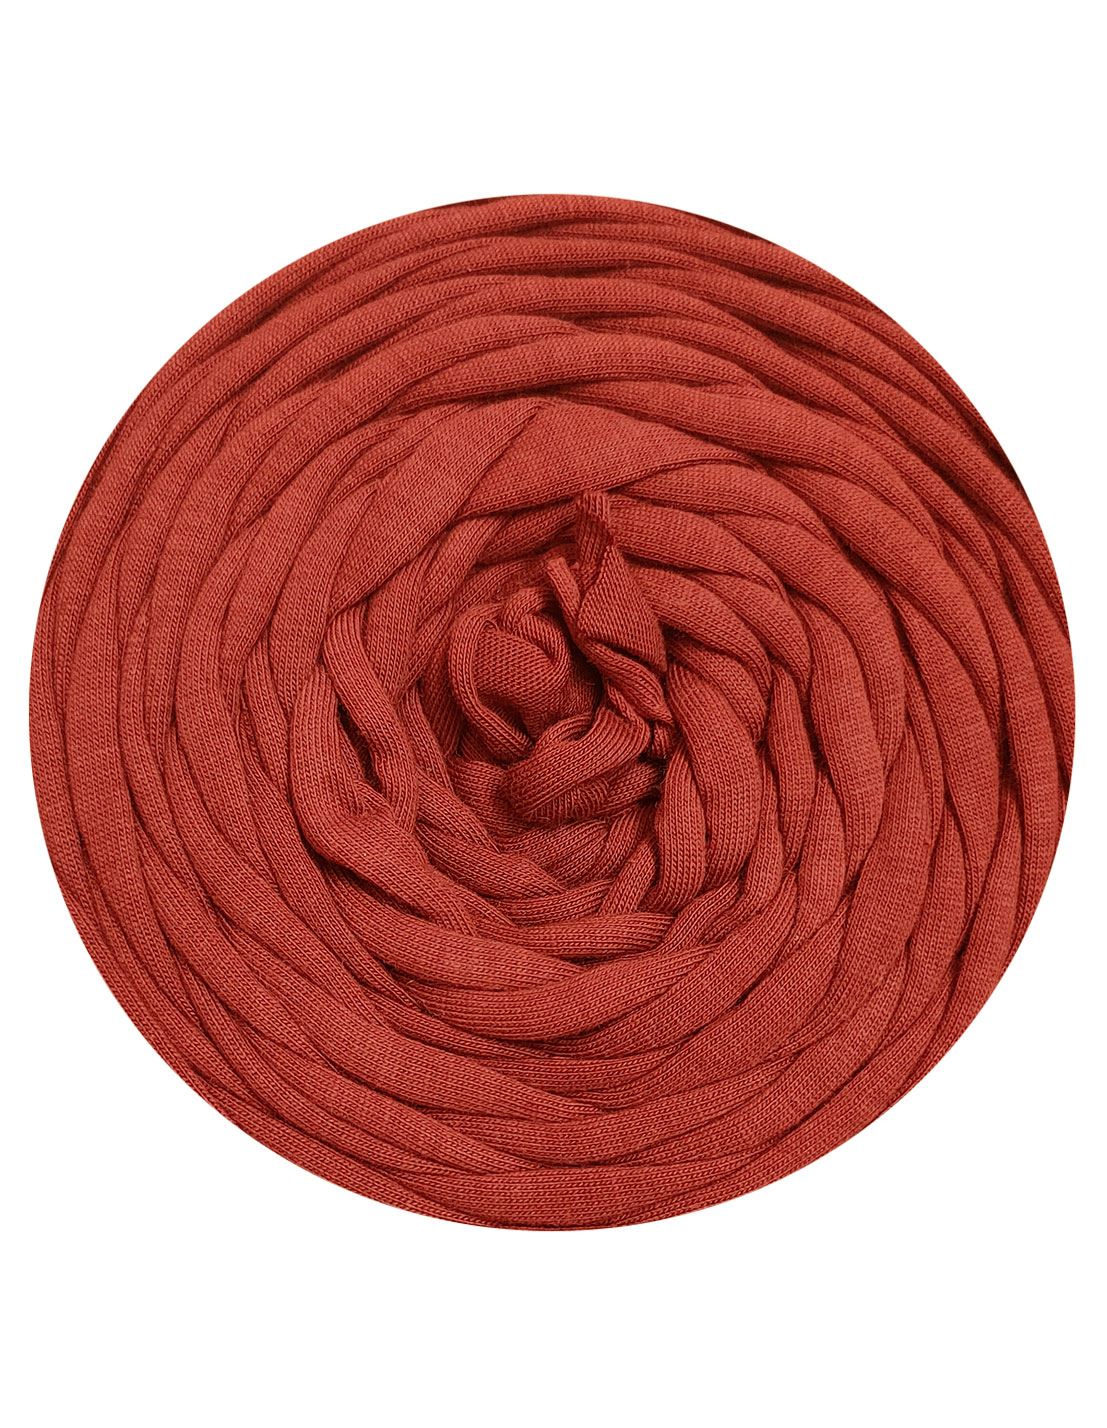 Brick red t-shirt yarn (100-120m)